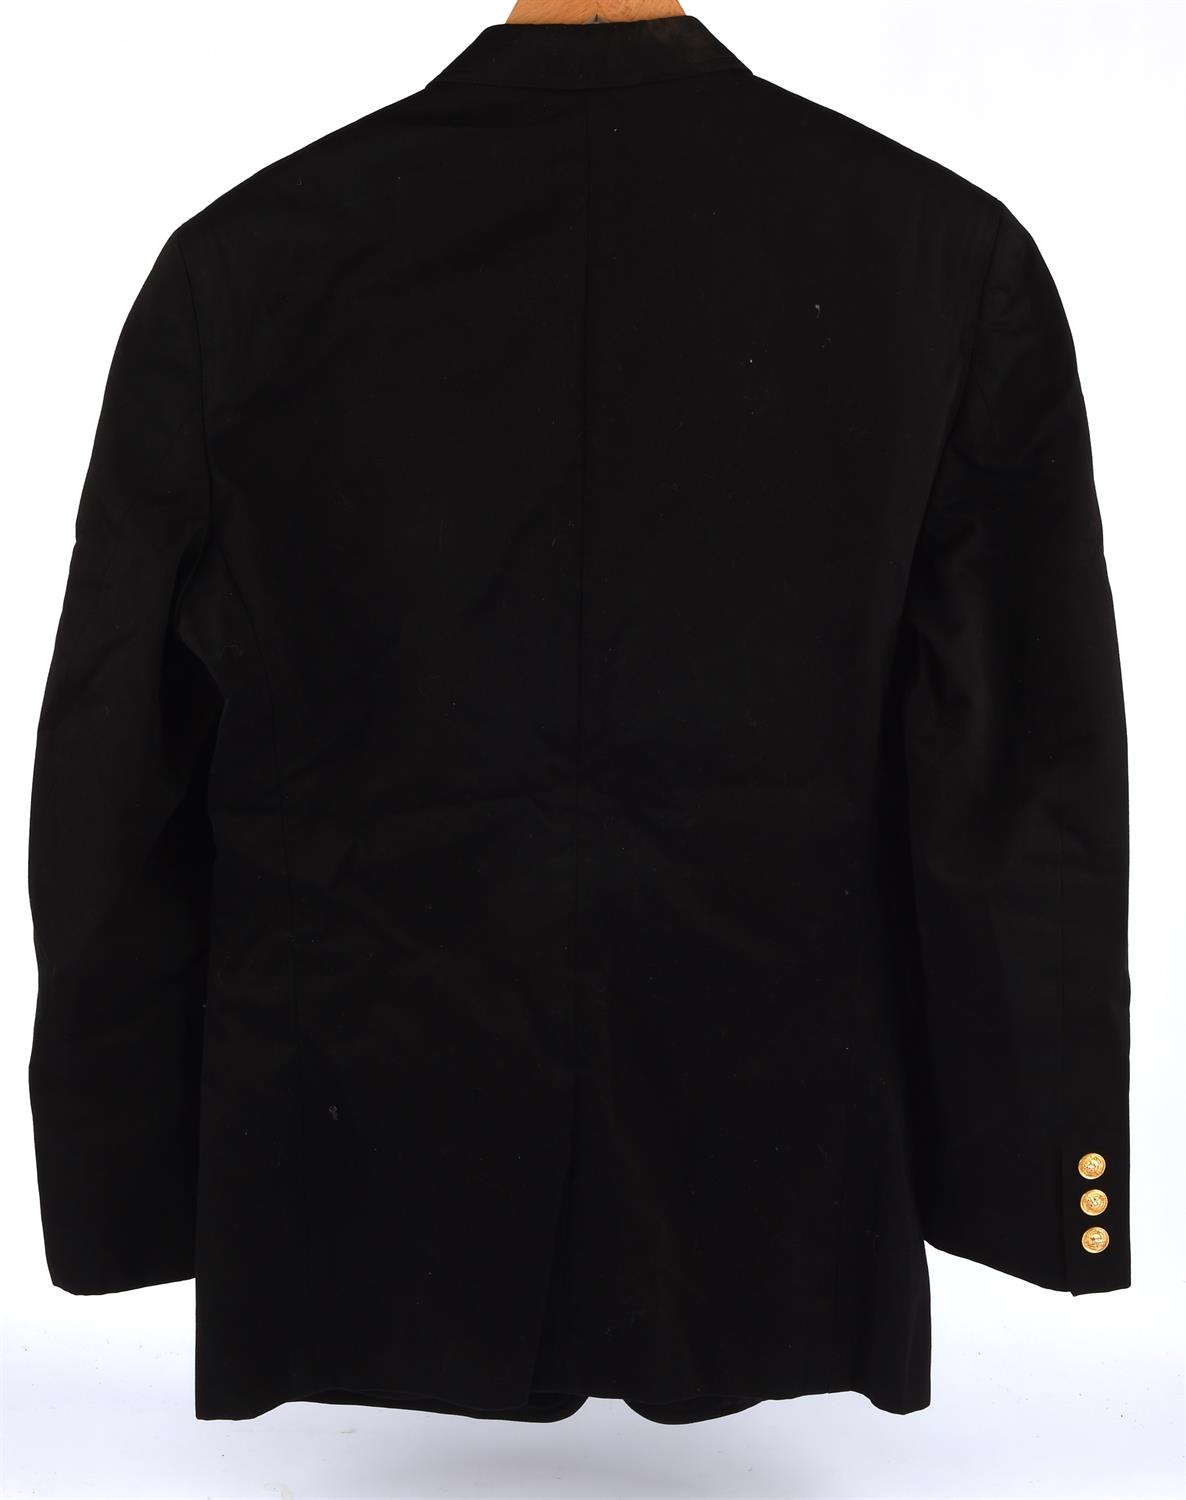 Michael Jackson - Versus Gianni Versace black cotton jacket with gold metal buttons and sequins, - Bild 5 aus 5